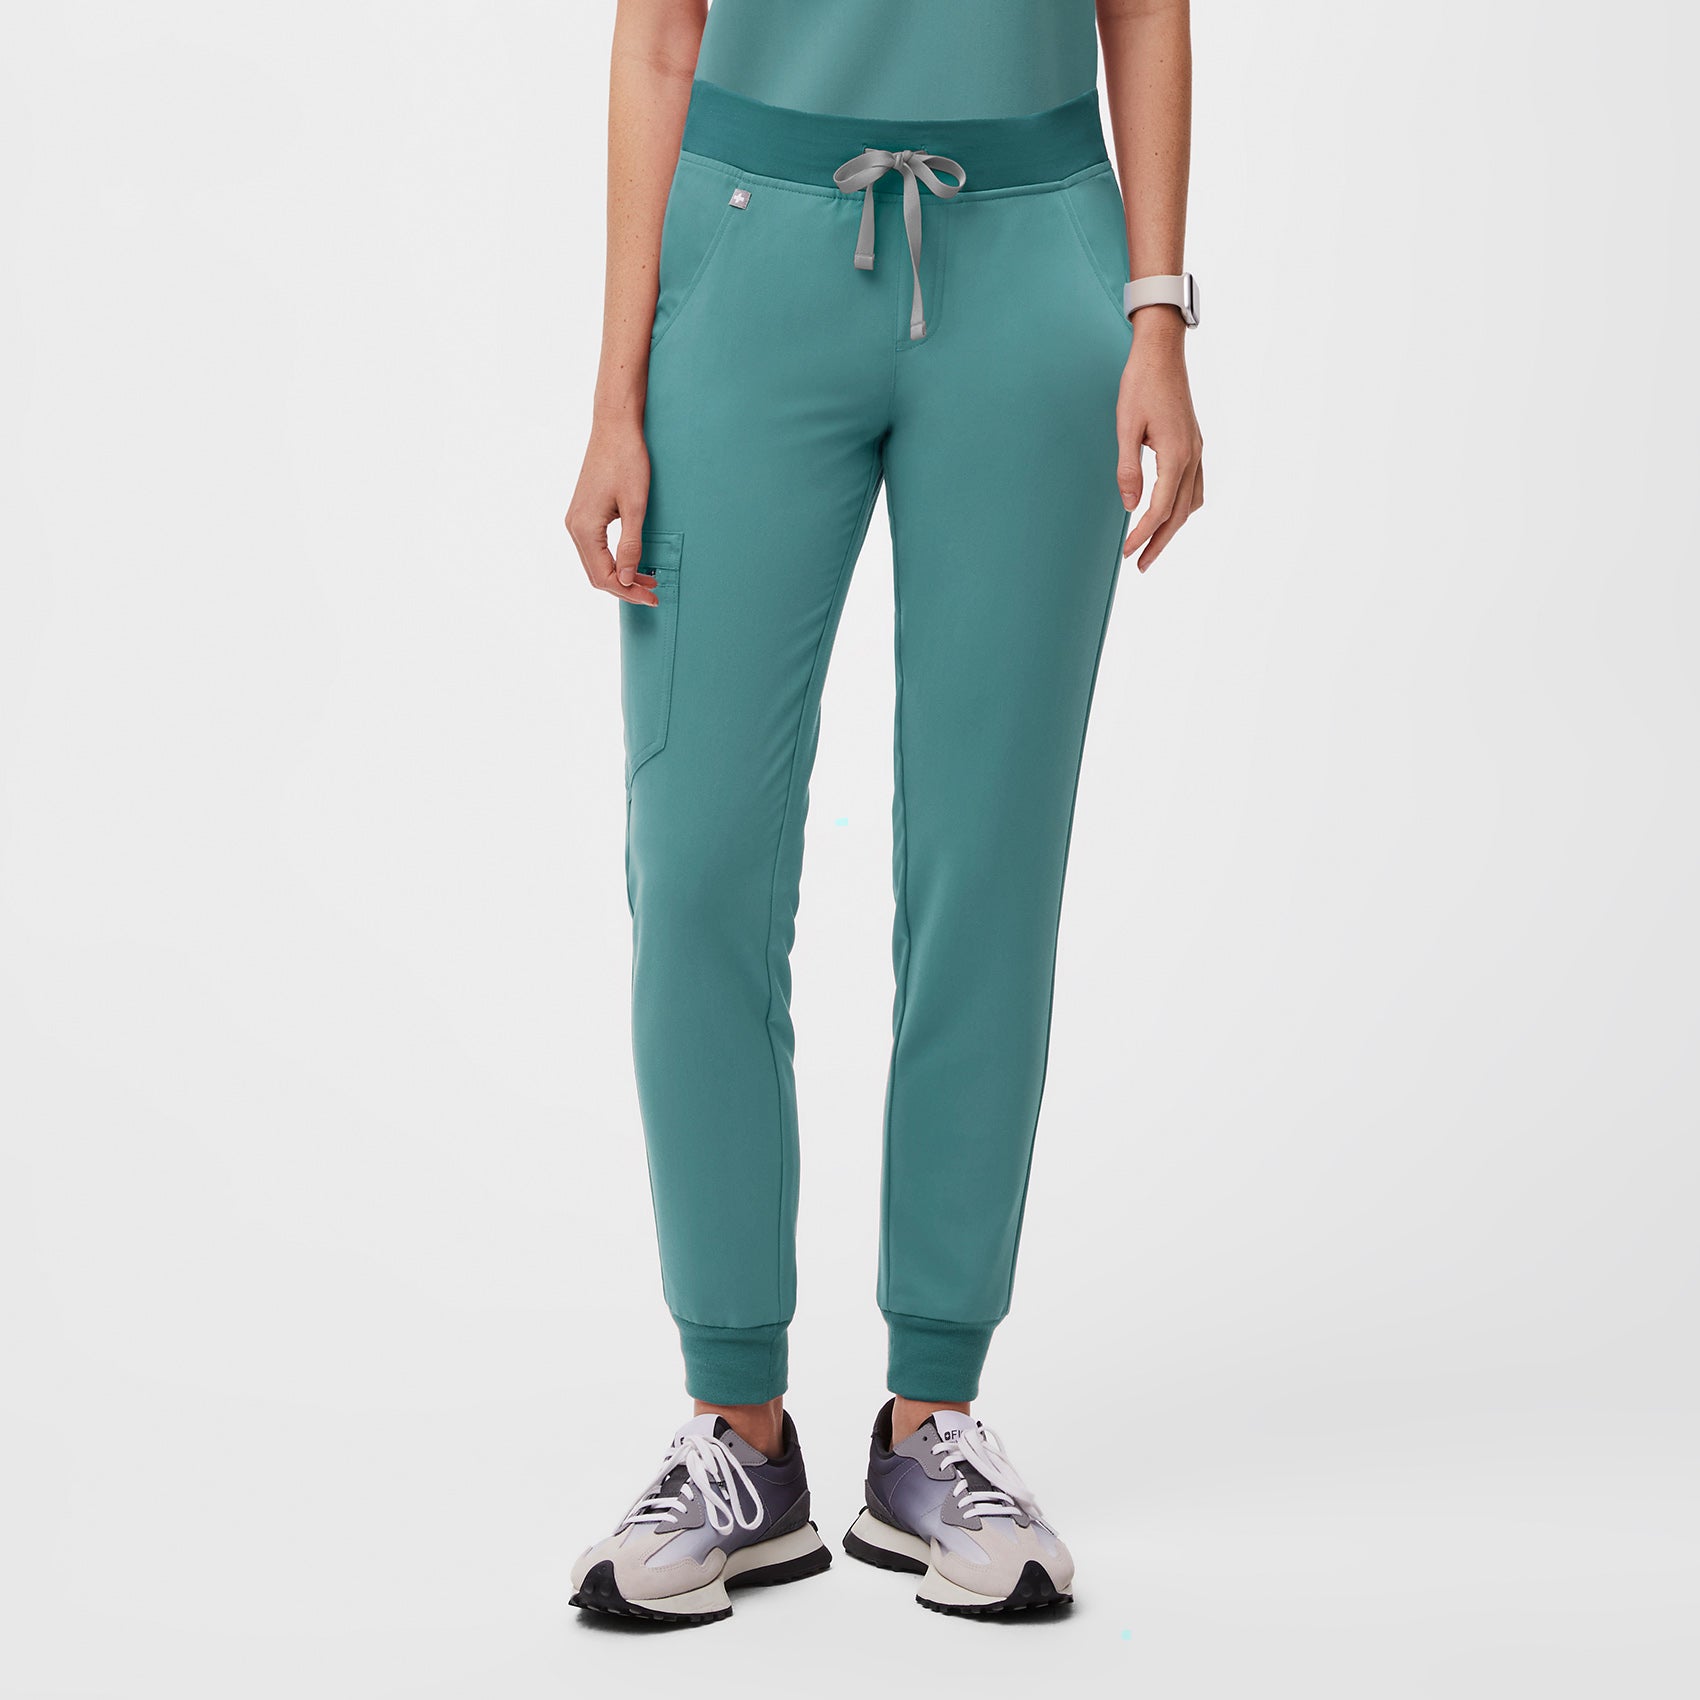 Pantalón deportivo de uniforme médico Zamora™ para mujer - Verde agua · FIGS